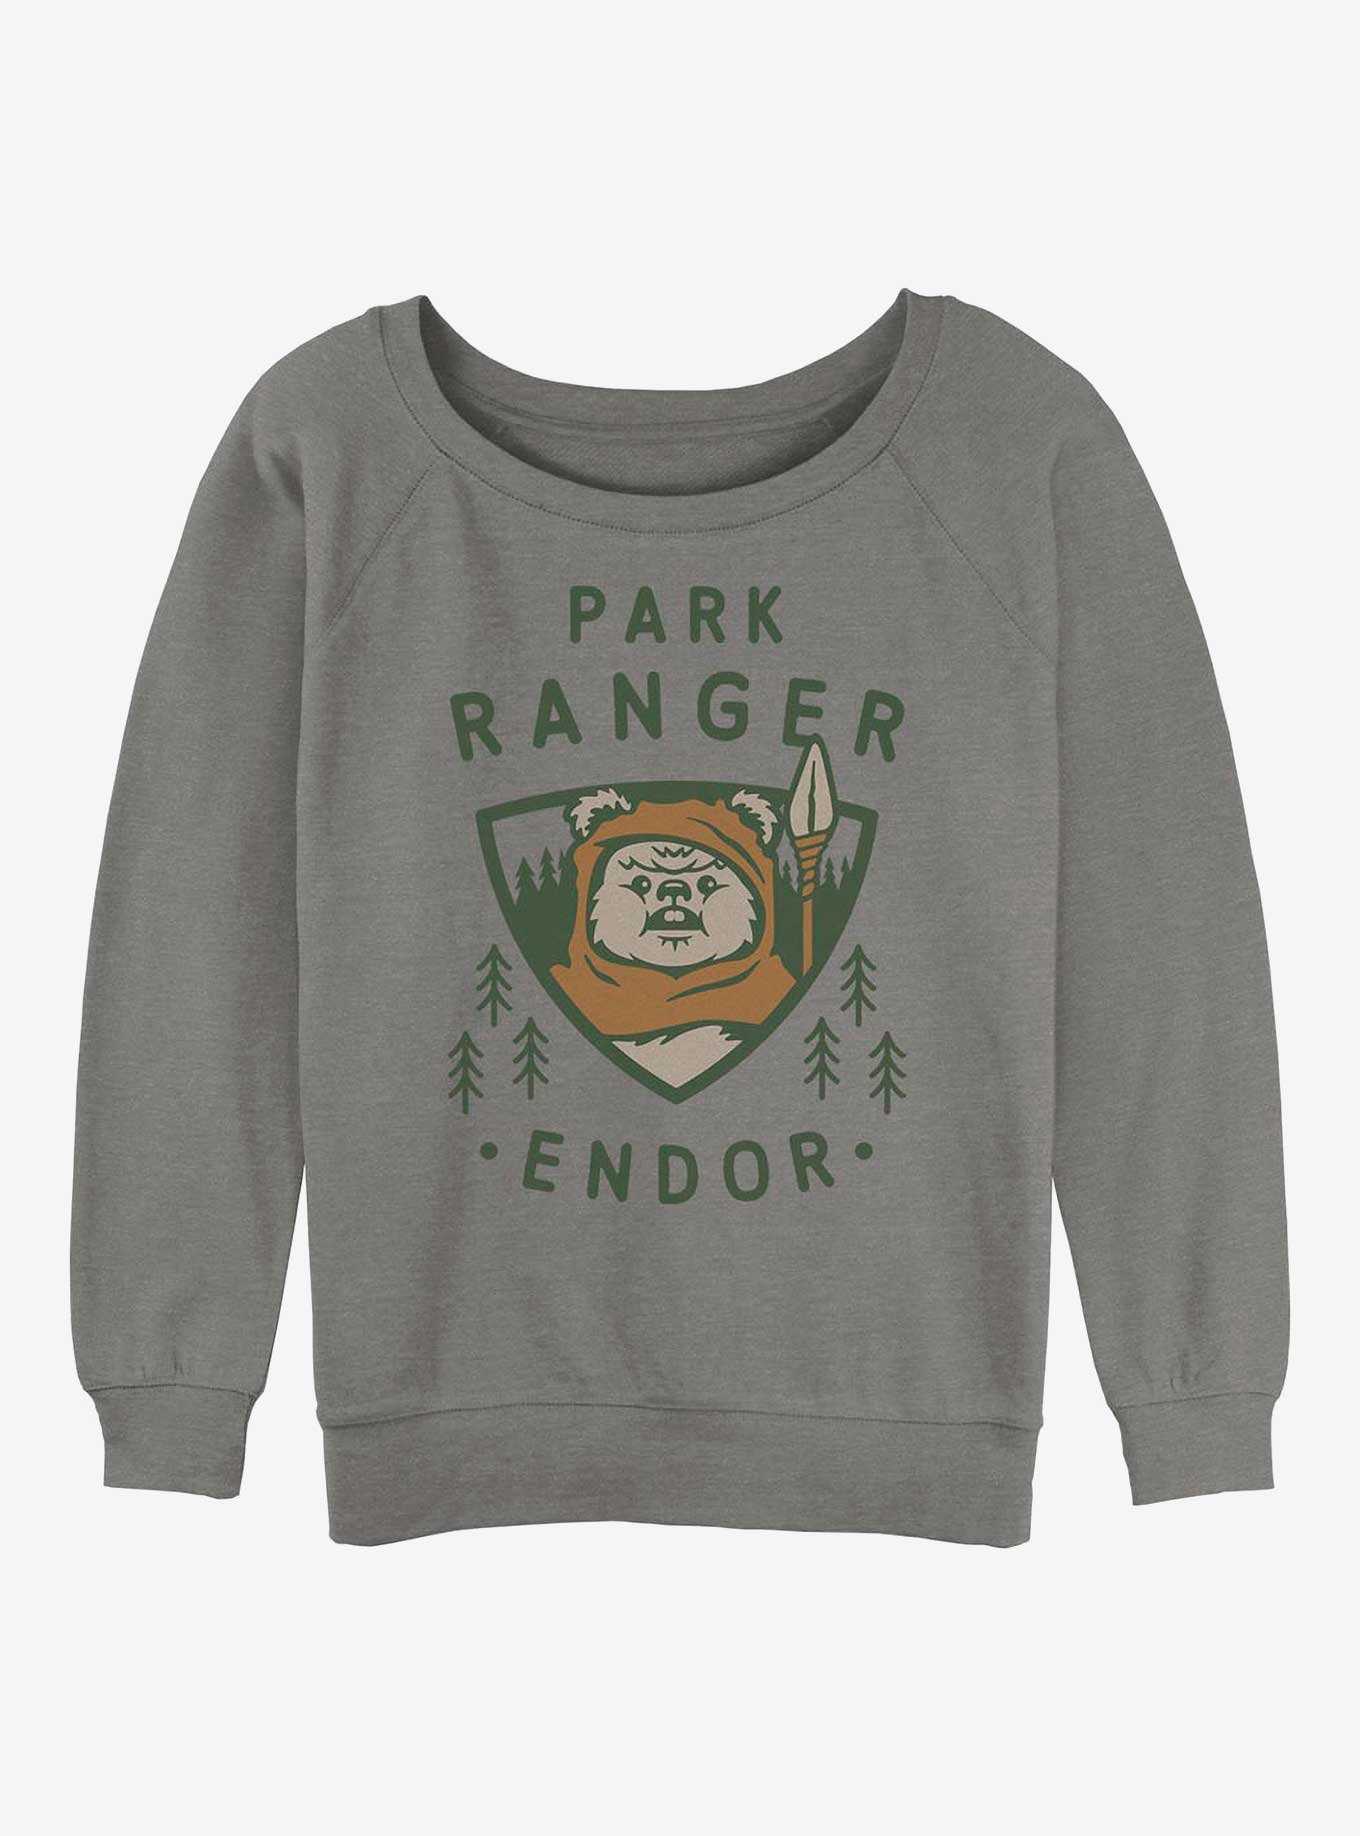 Star Wars Park Ranger Girls Slouchy Sweatshirt, , hi-res